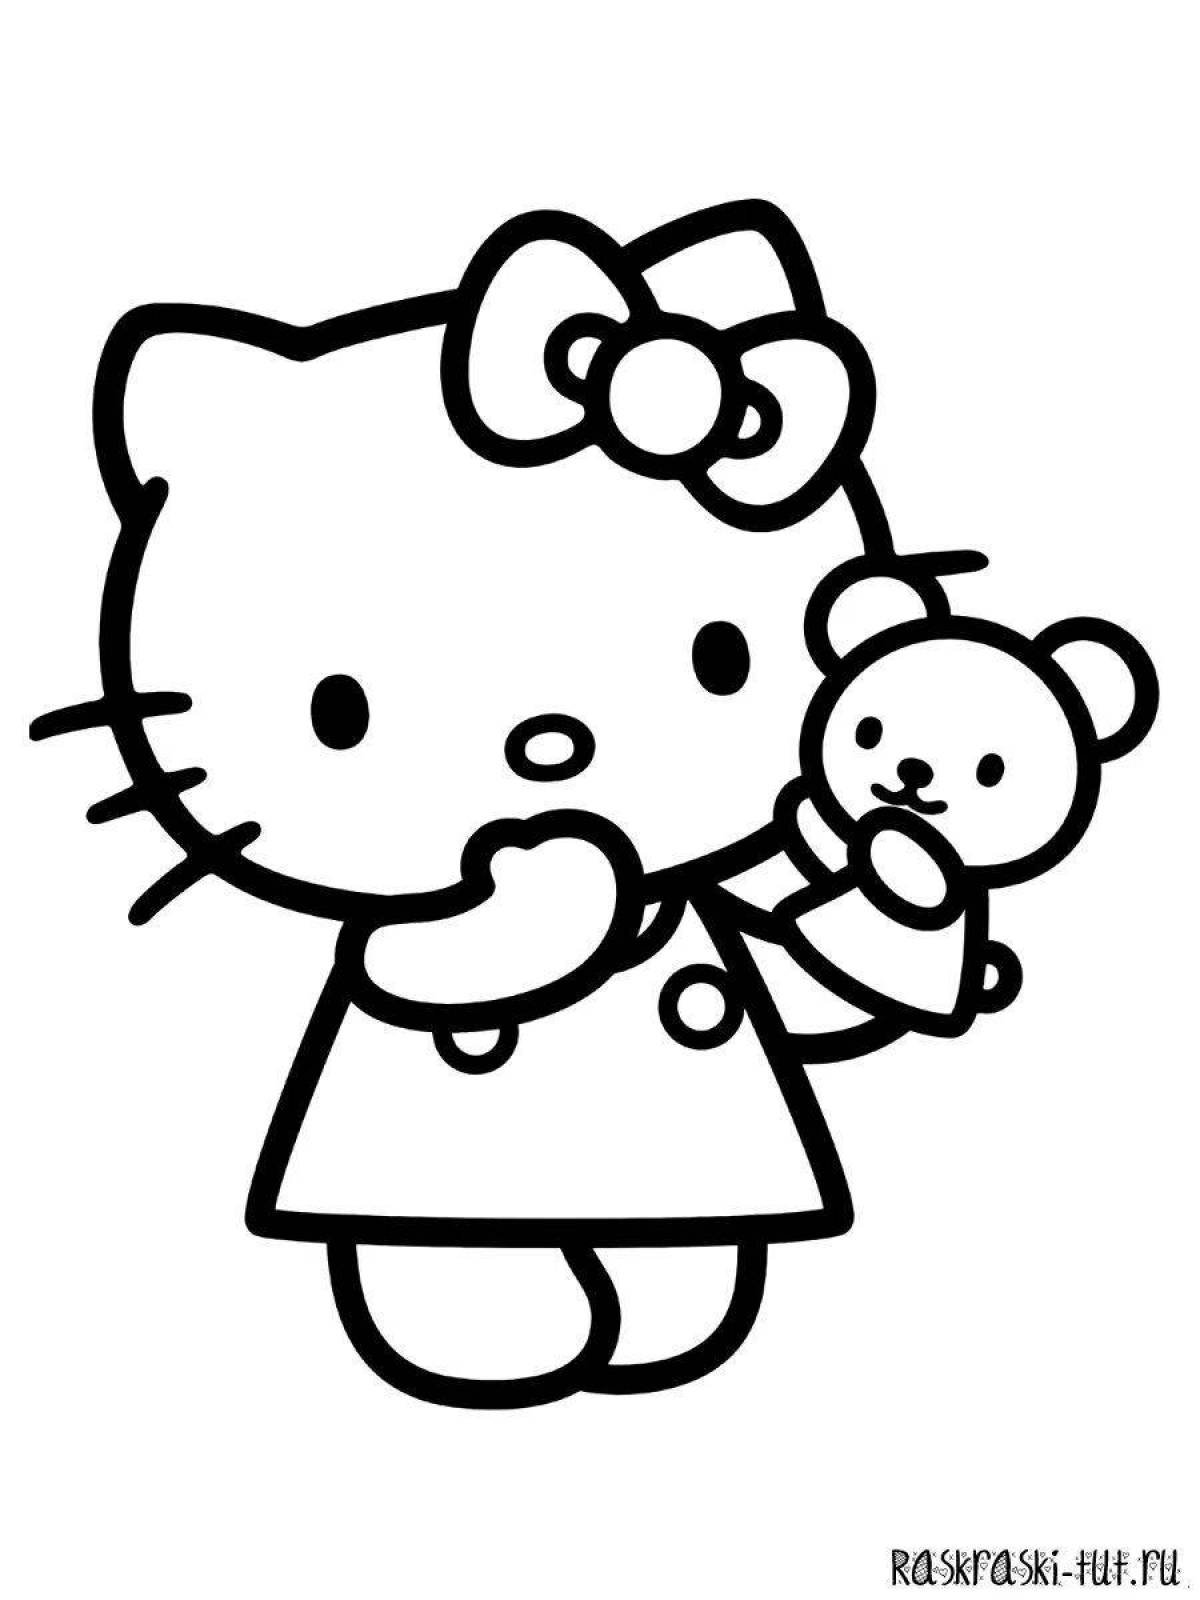 Раскраска с игривыми персонажами hello kitty